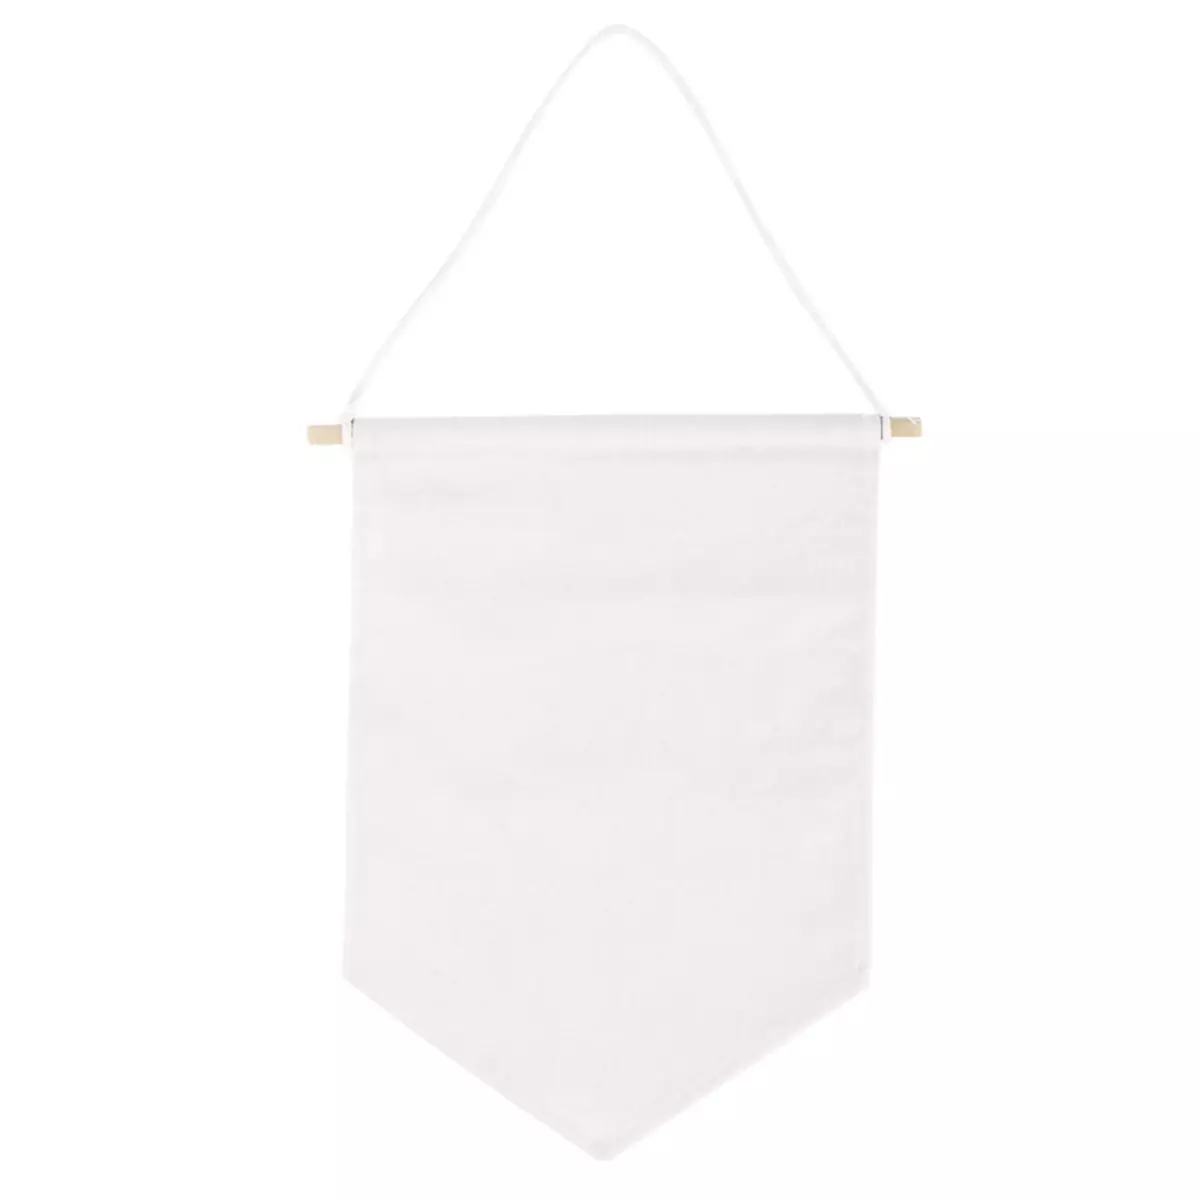 Rayher Fanion de tissu à suspendre, blanc naturel, 24x29cm, 1 pce.